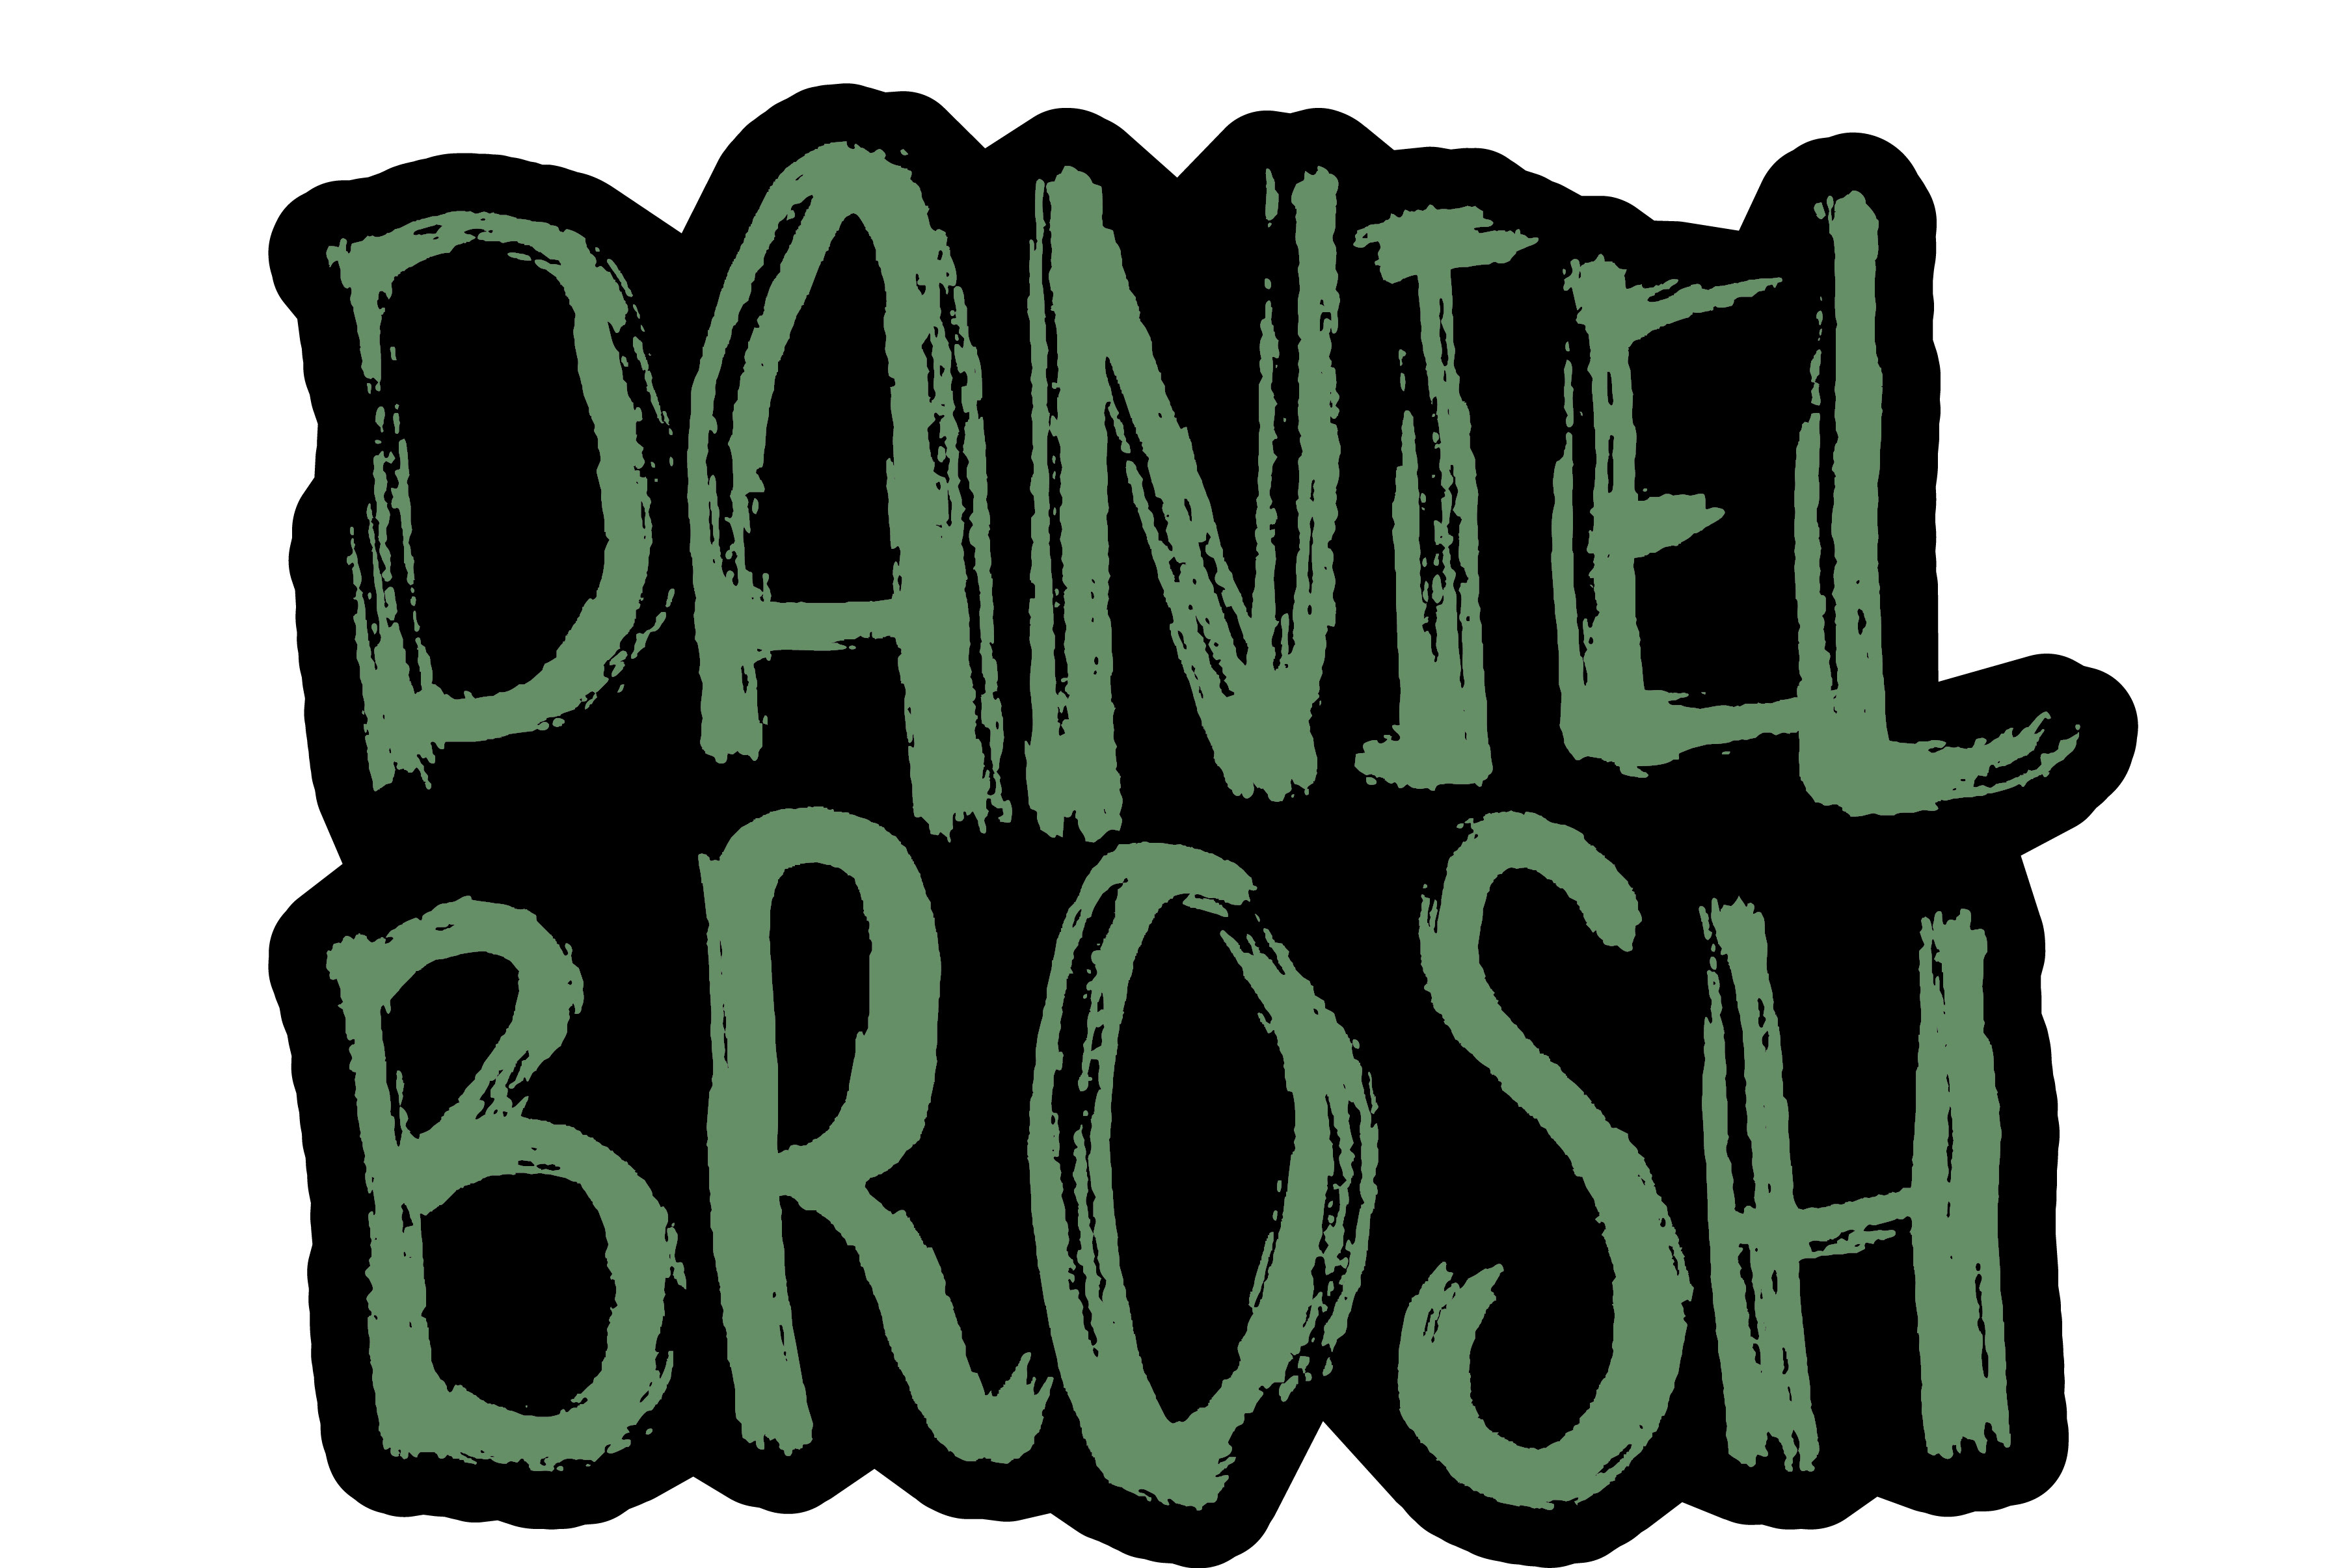 Daniel Brosh